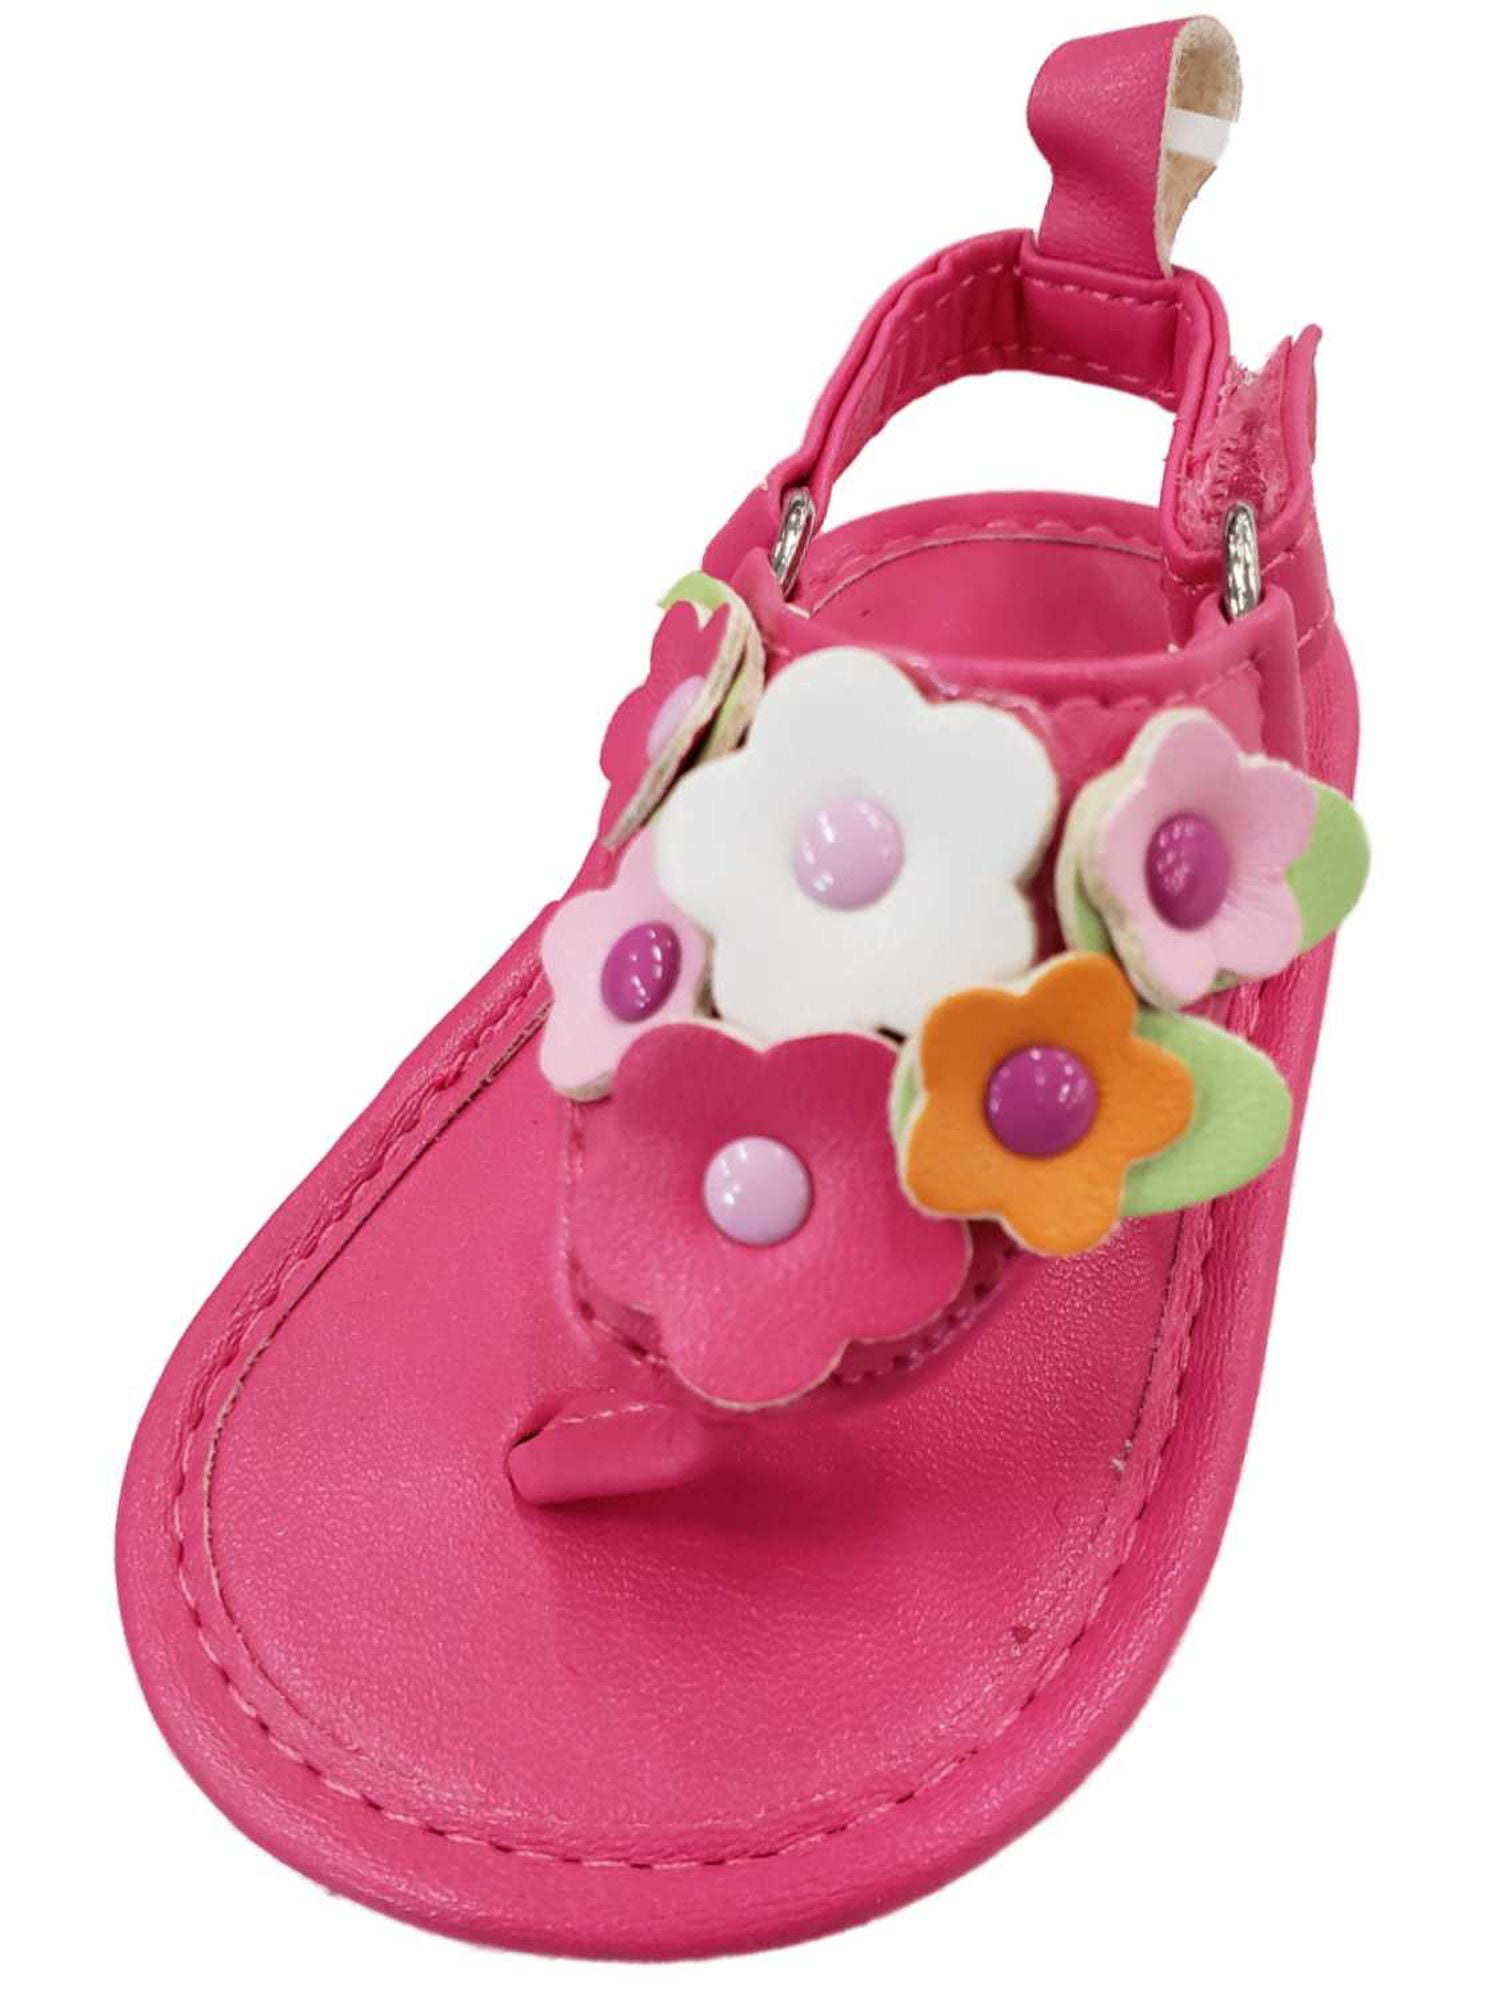 Pink Tan Baby My First Ipanema Sandals Heart Infant Girl Flat Beach Flip Flops 